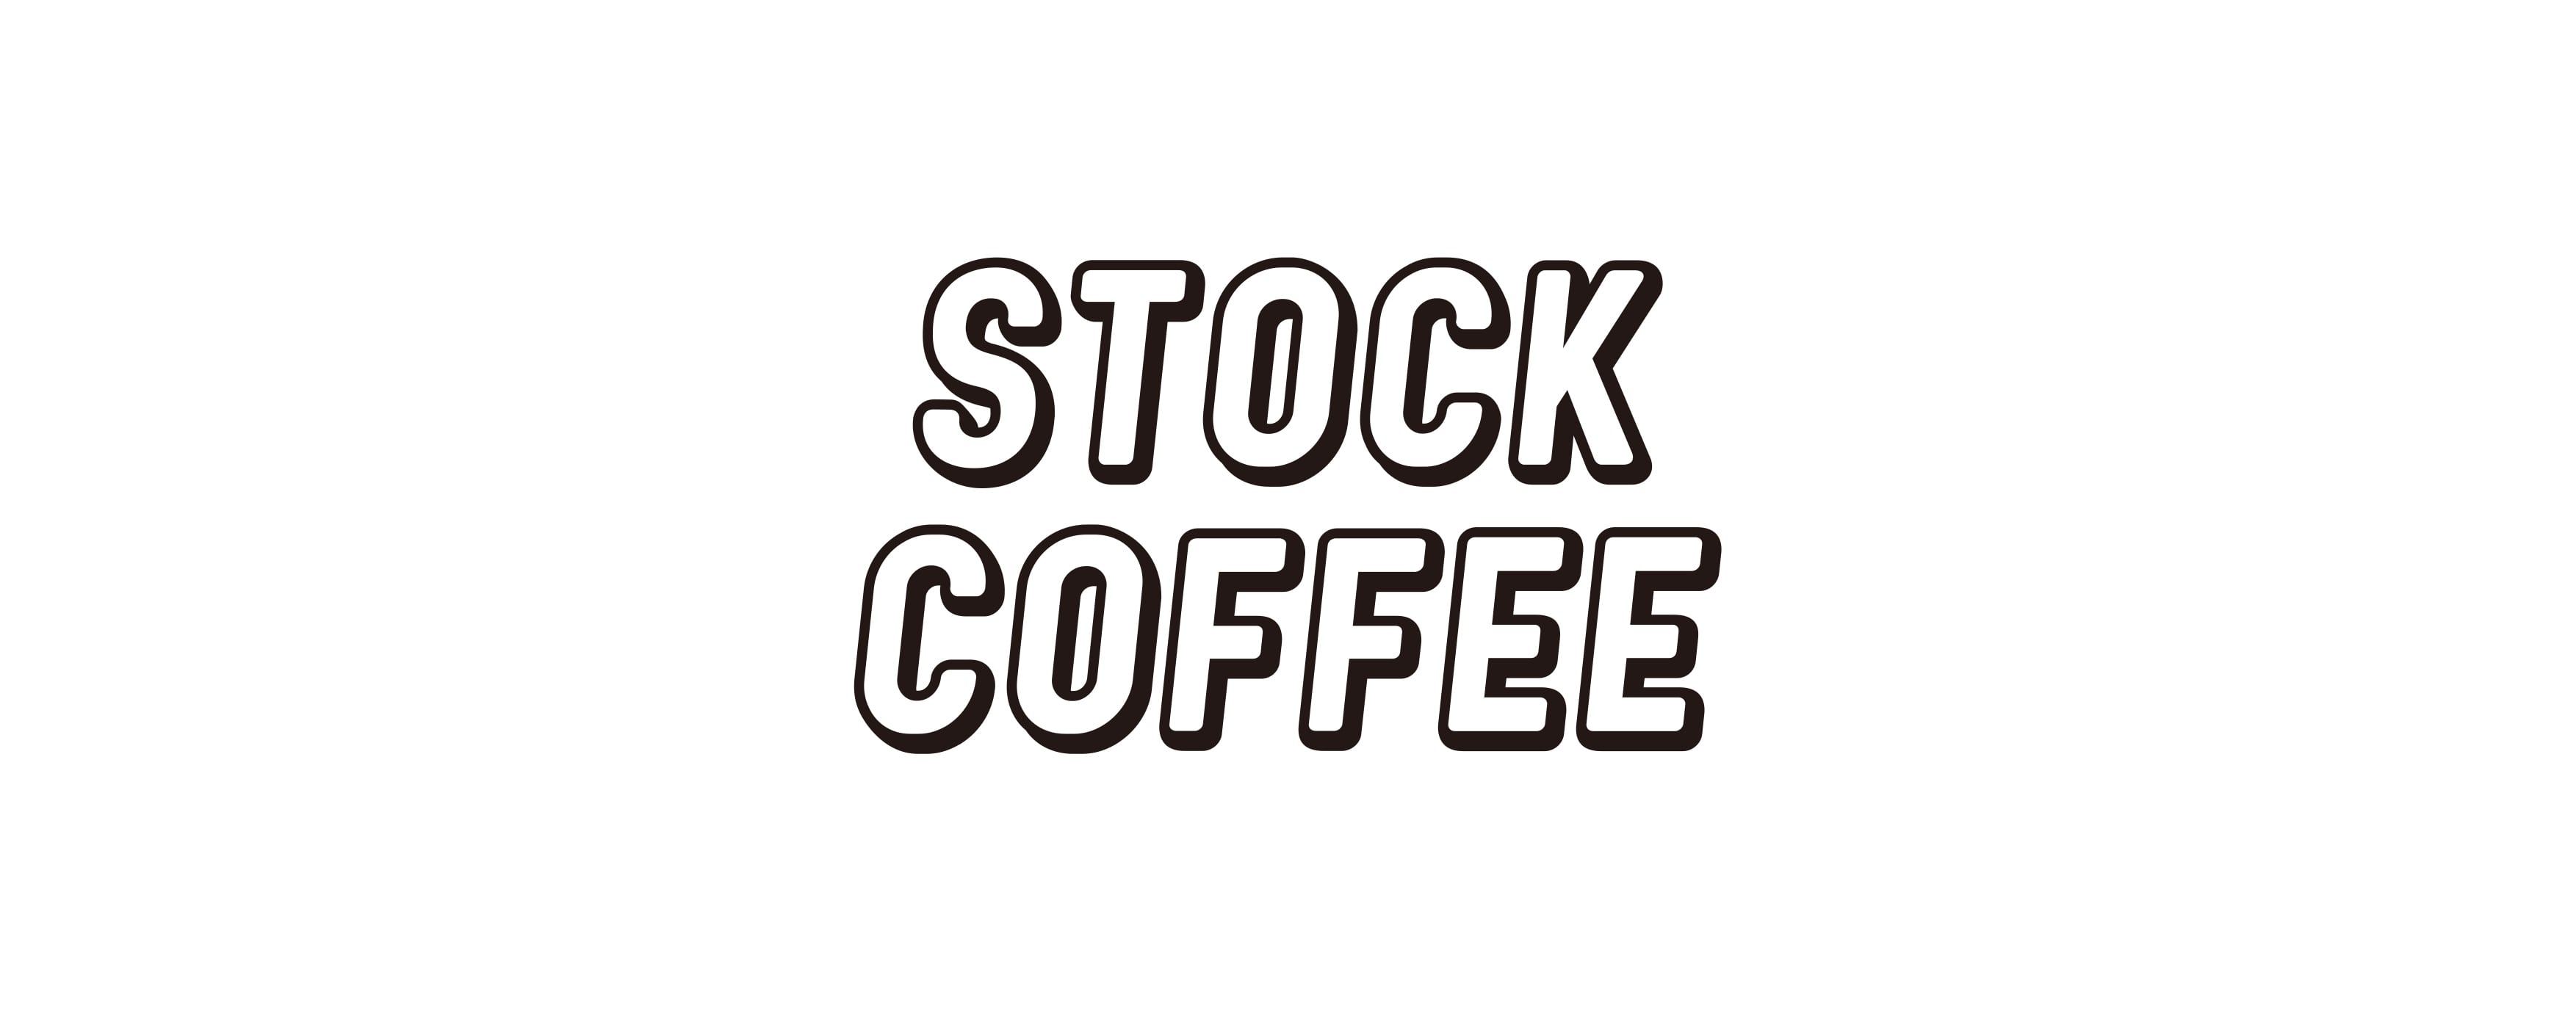 STOCK COFFEE